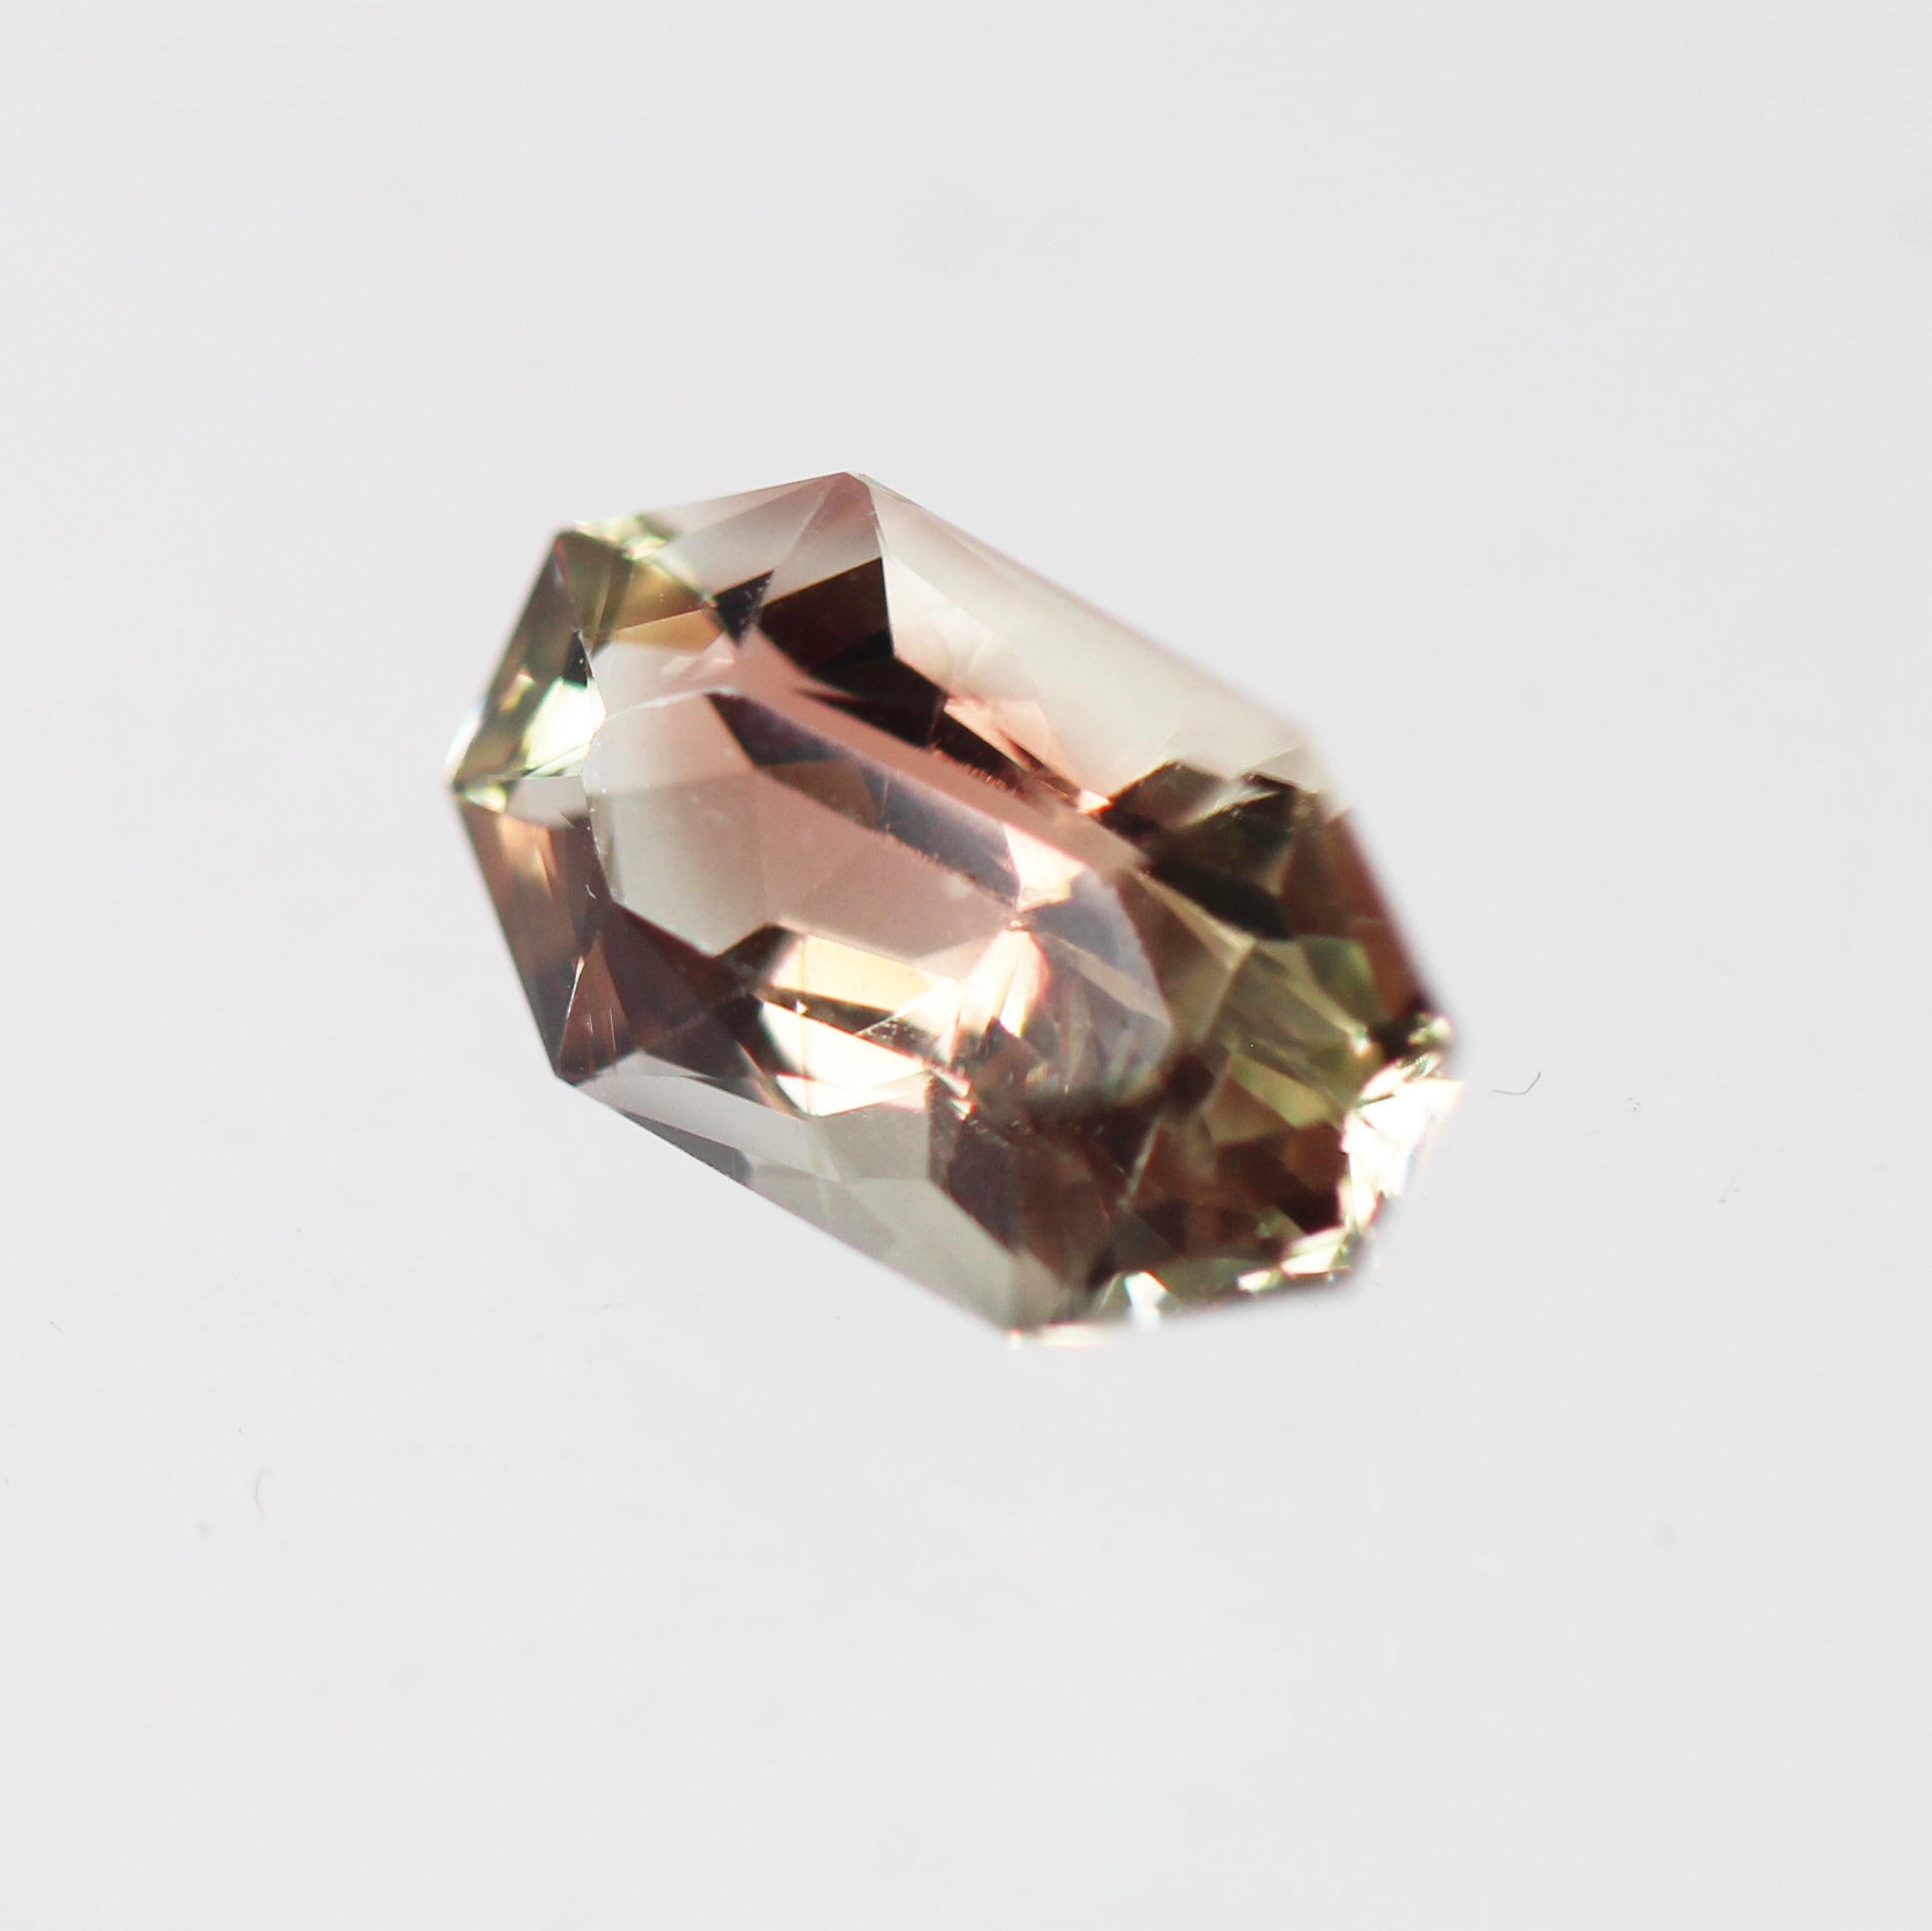 6 Carat Hexagon Sunstone - Inventory Code SUNHB600 - Midwinter Co. Alternative Bridal Rings and Modern Fine Jewelry